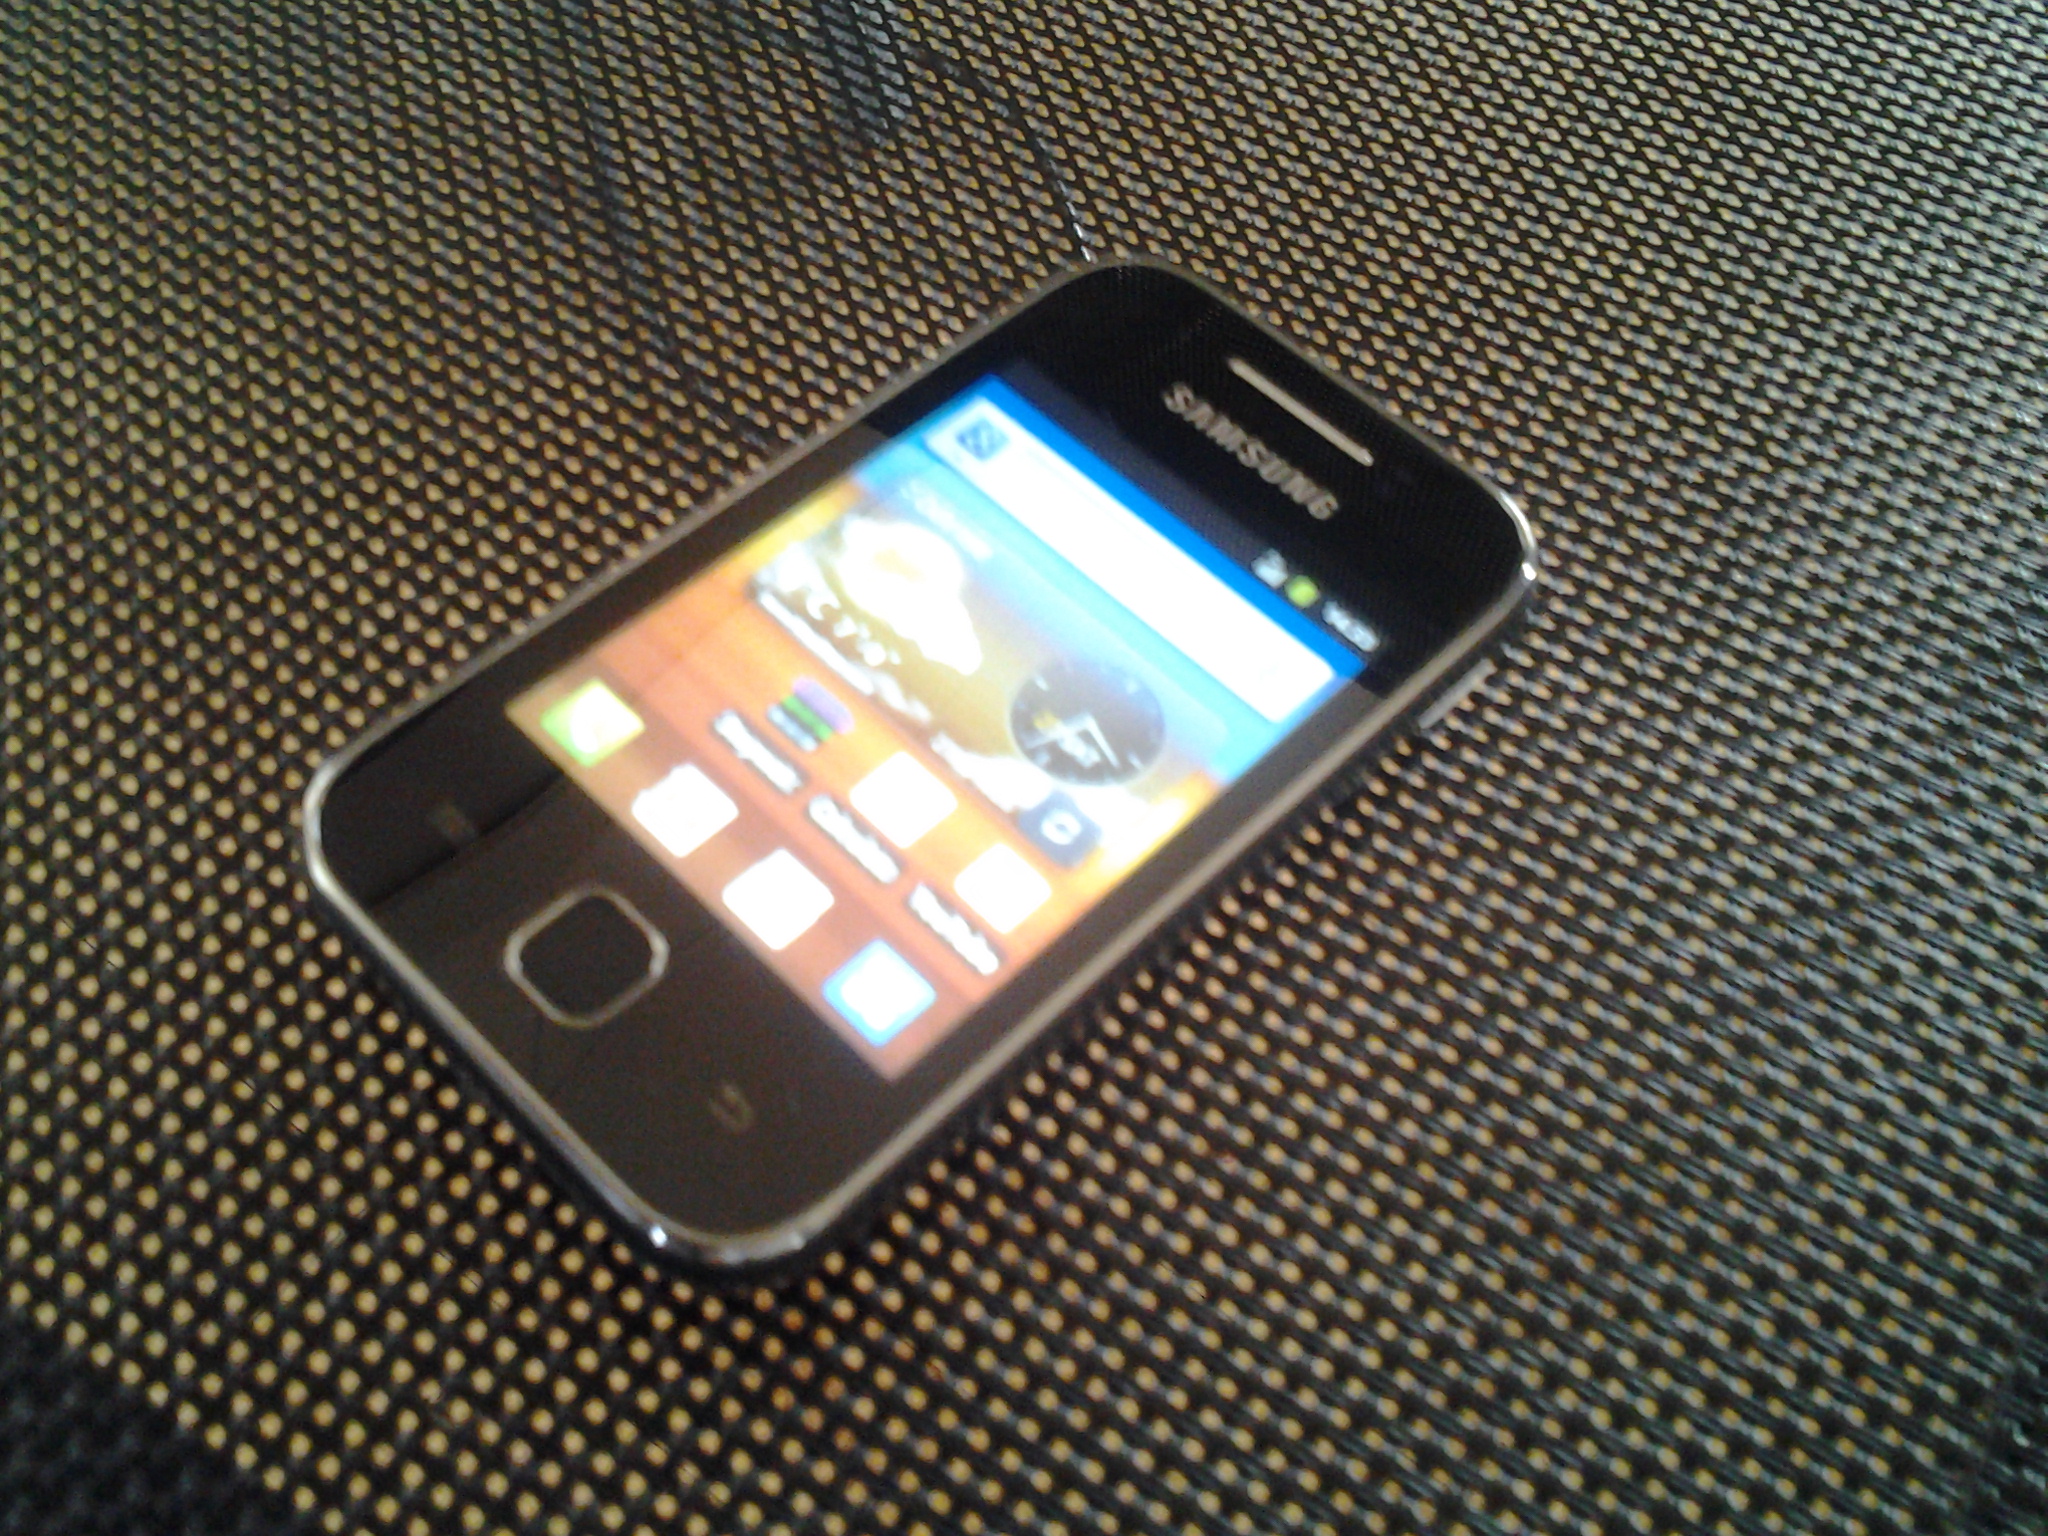 Samsung Galaxy Y S5360 - Victor Truica's Playgr0und